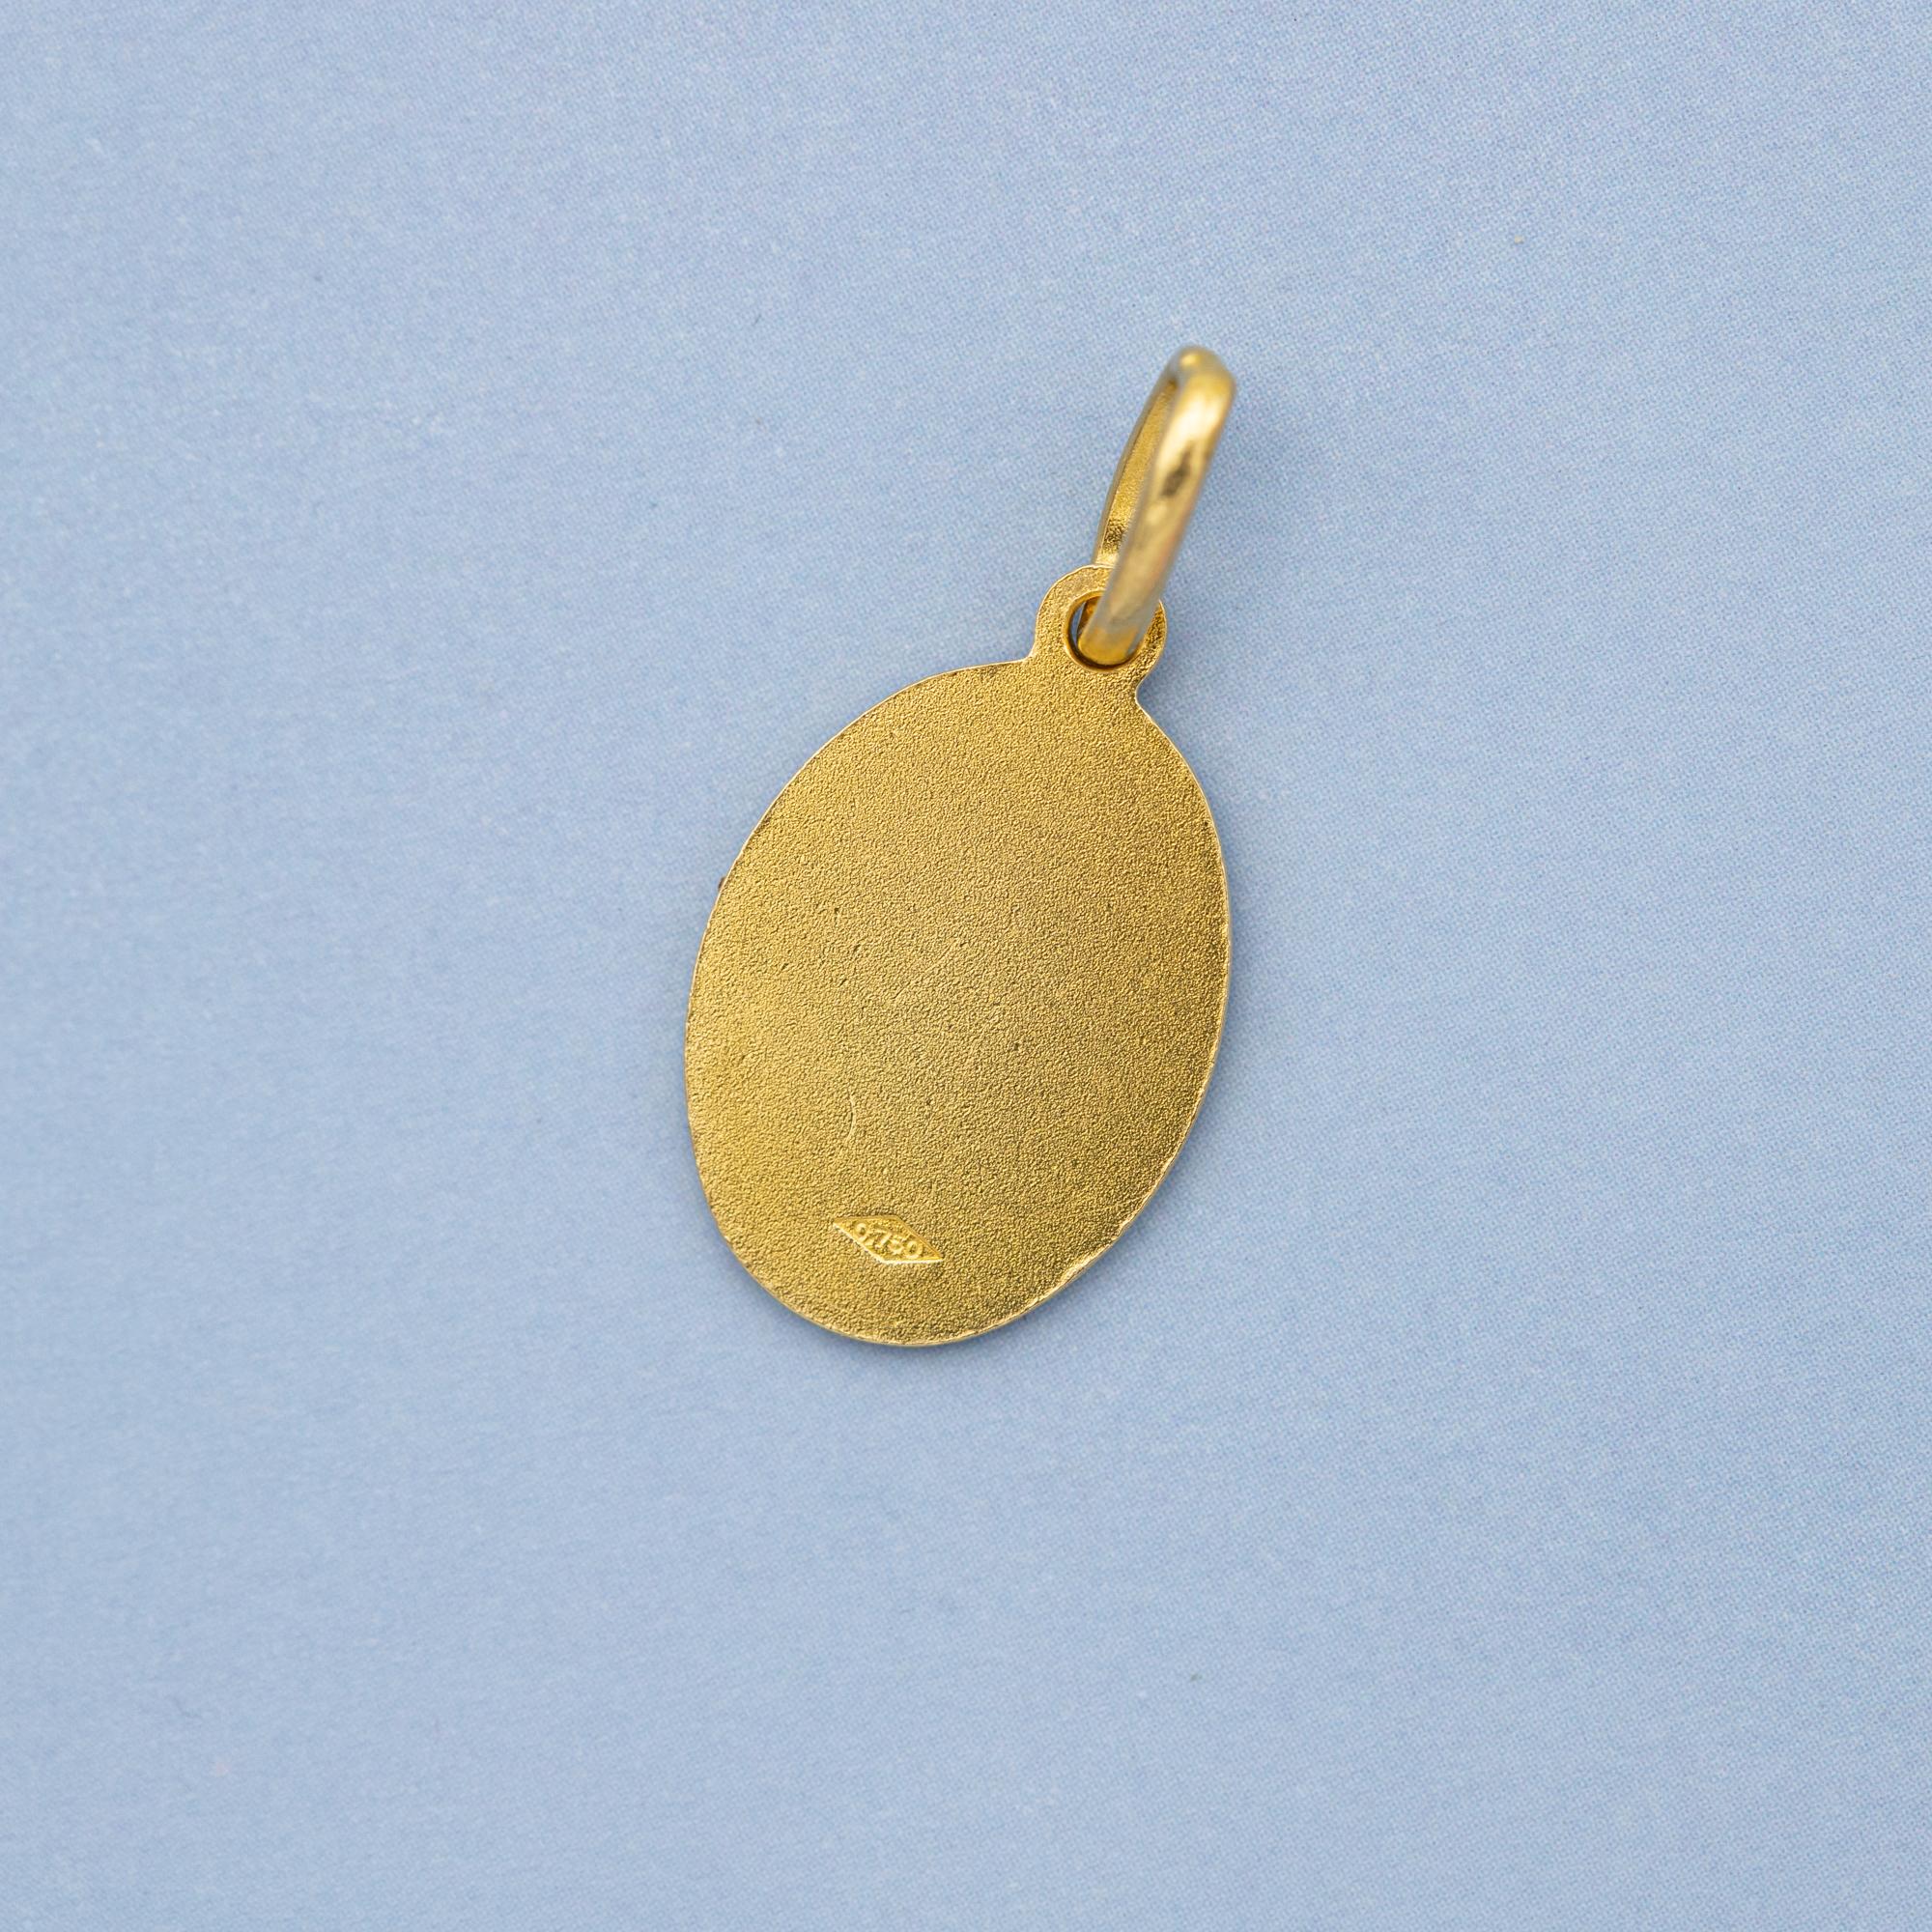 Women's or Men's Vintage 18k cherub charm pendant - Angel medallion - solid yellow gold